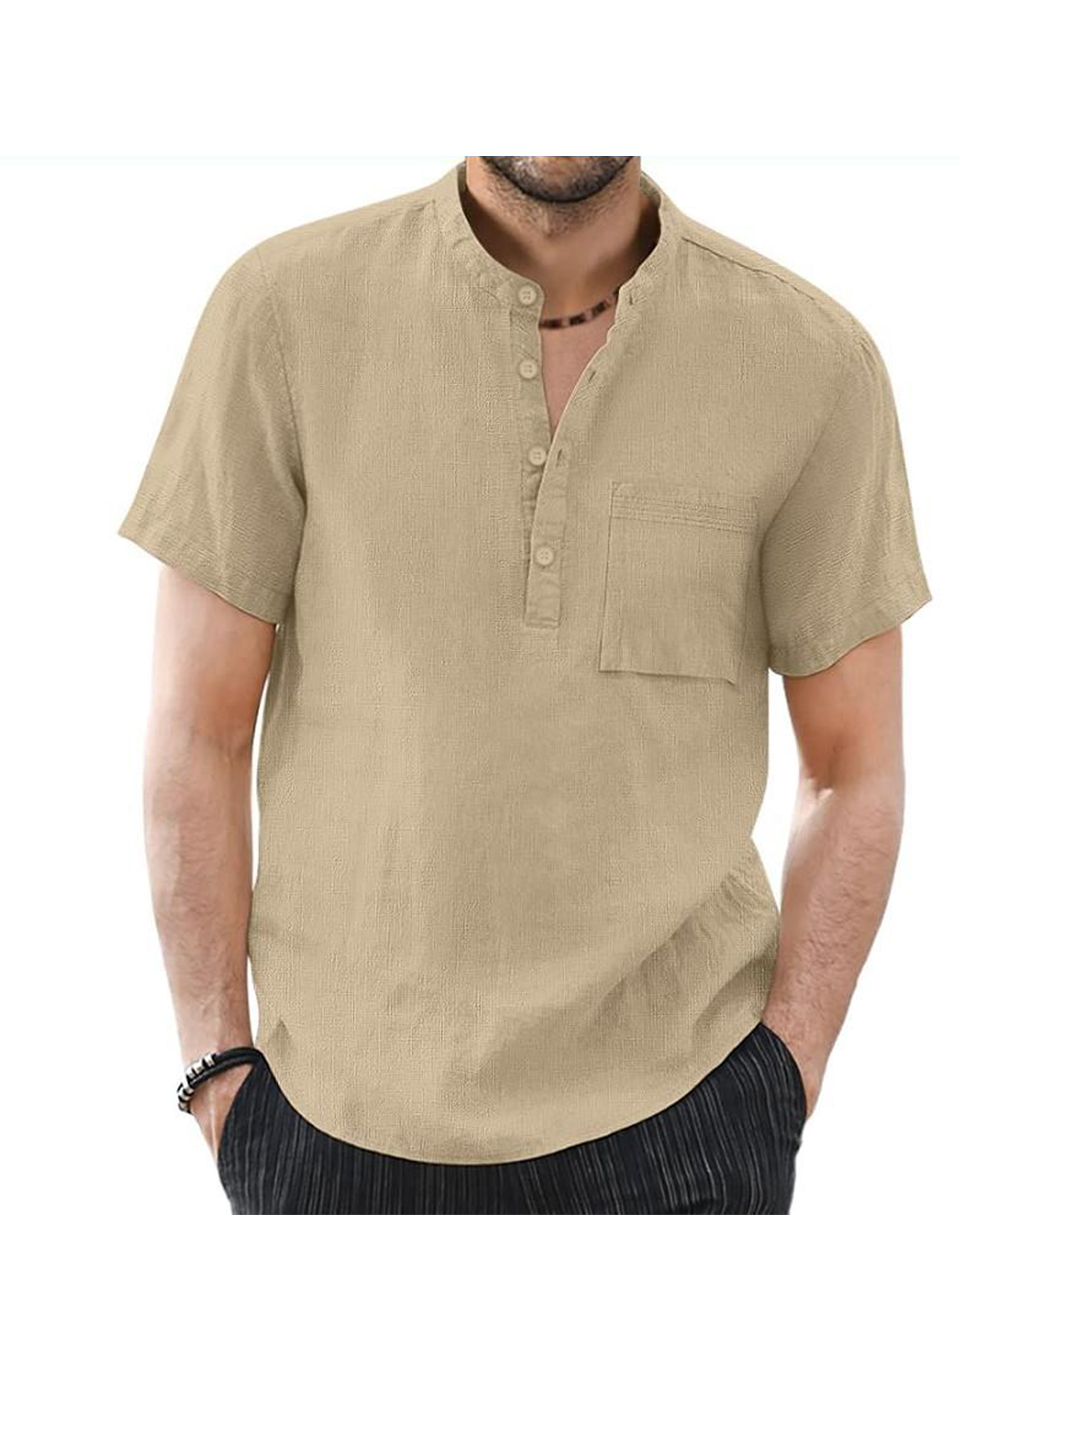 Men's Larry Solid Color Stand Collar Half Placket Short-sleeved Shirt-poisonstreetwear.com